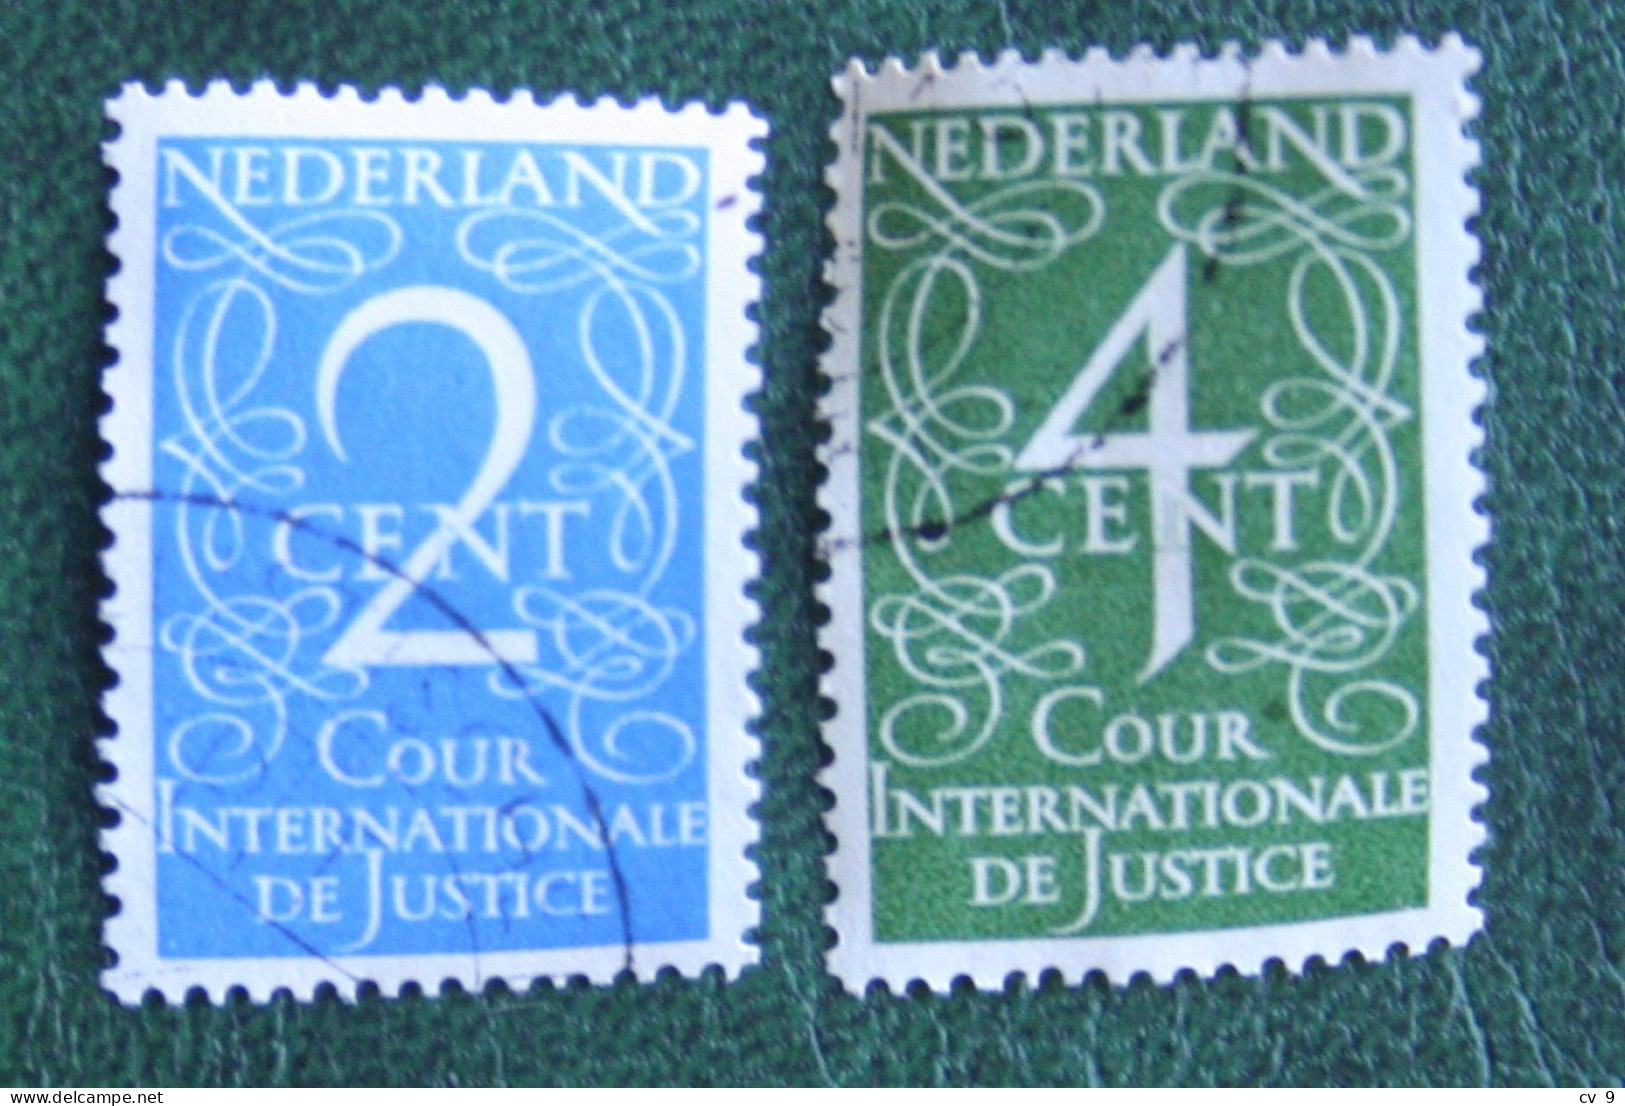 Dienst Cour Internationale De Justice NVPH D25-D26 D 25 (Mi 25-26) 1950 Gestempeld / Used NEDERLAND / NIEDERLANDE - Dienstmarken